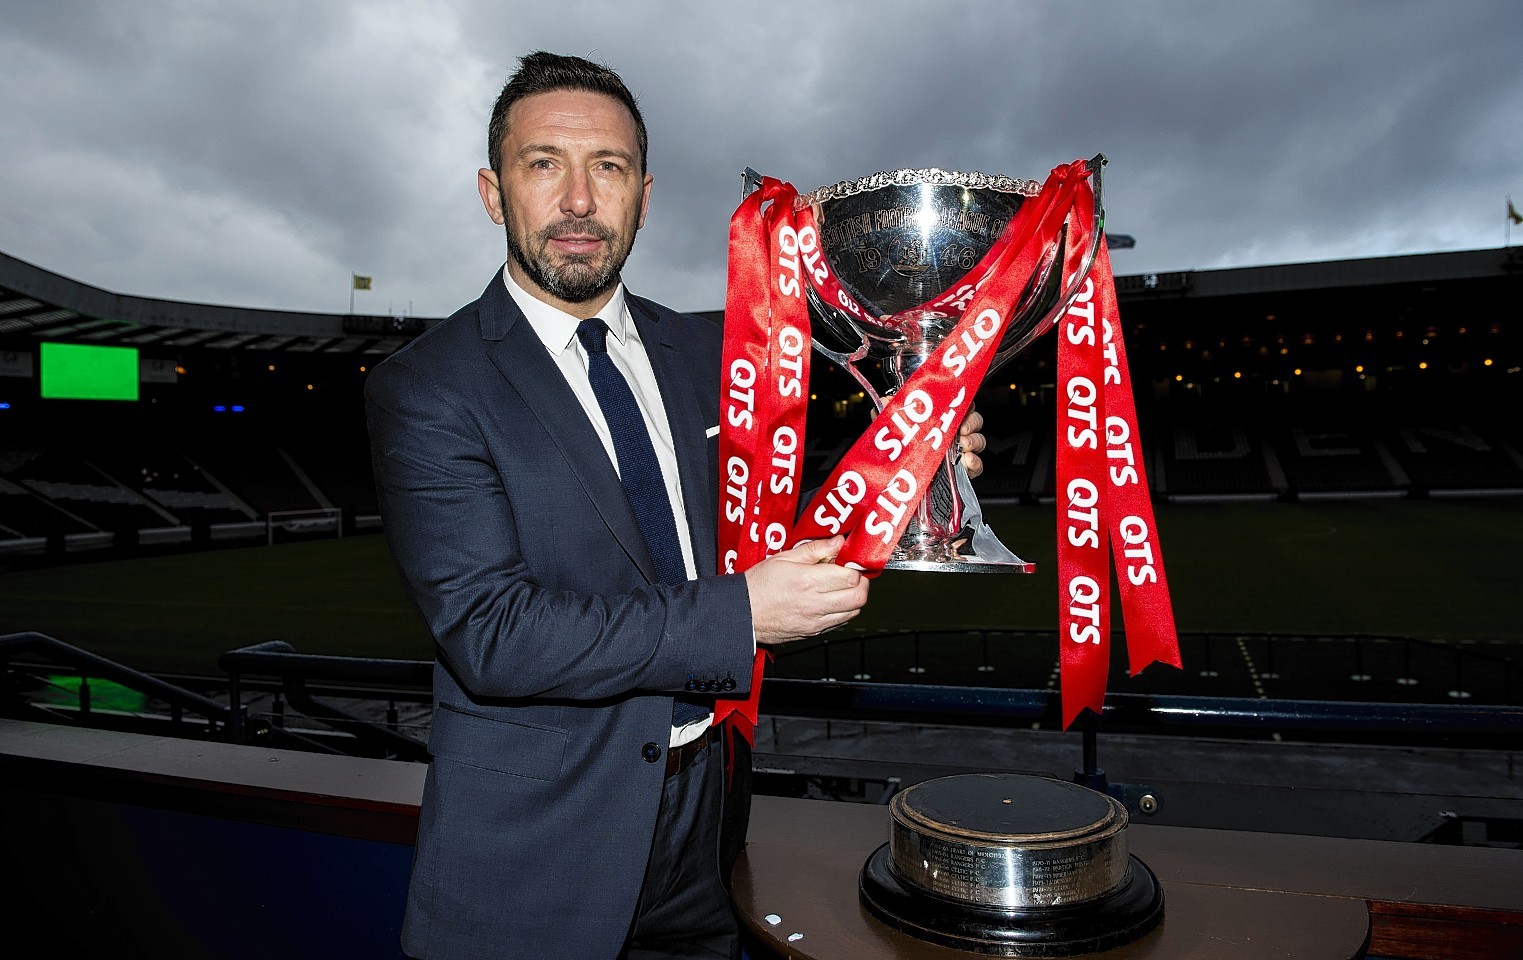 Derek McInnes is looking to lift the League Cup again this season